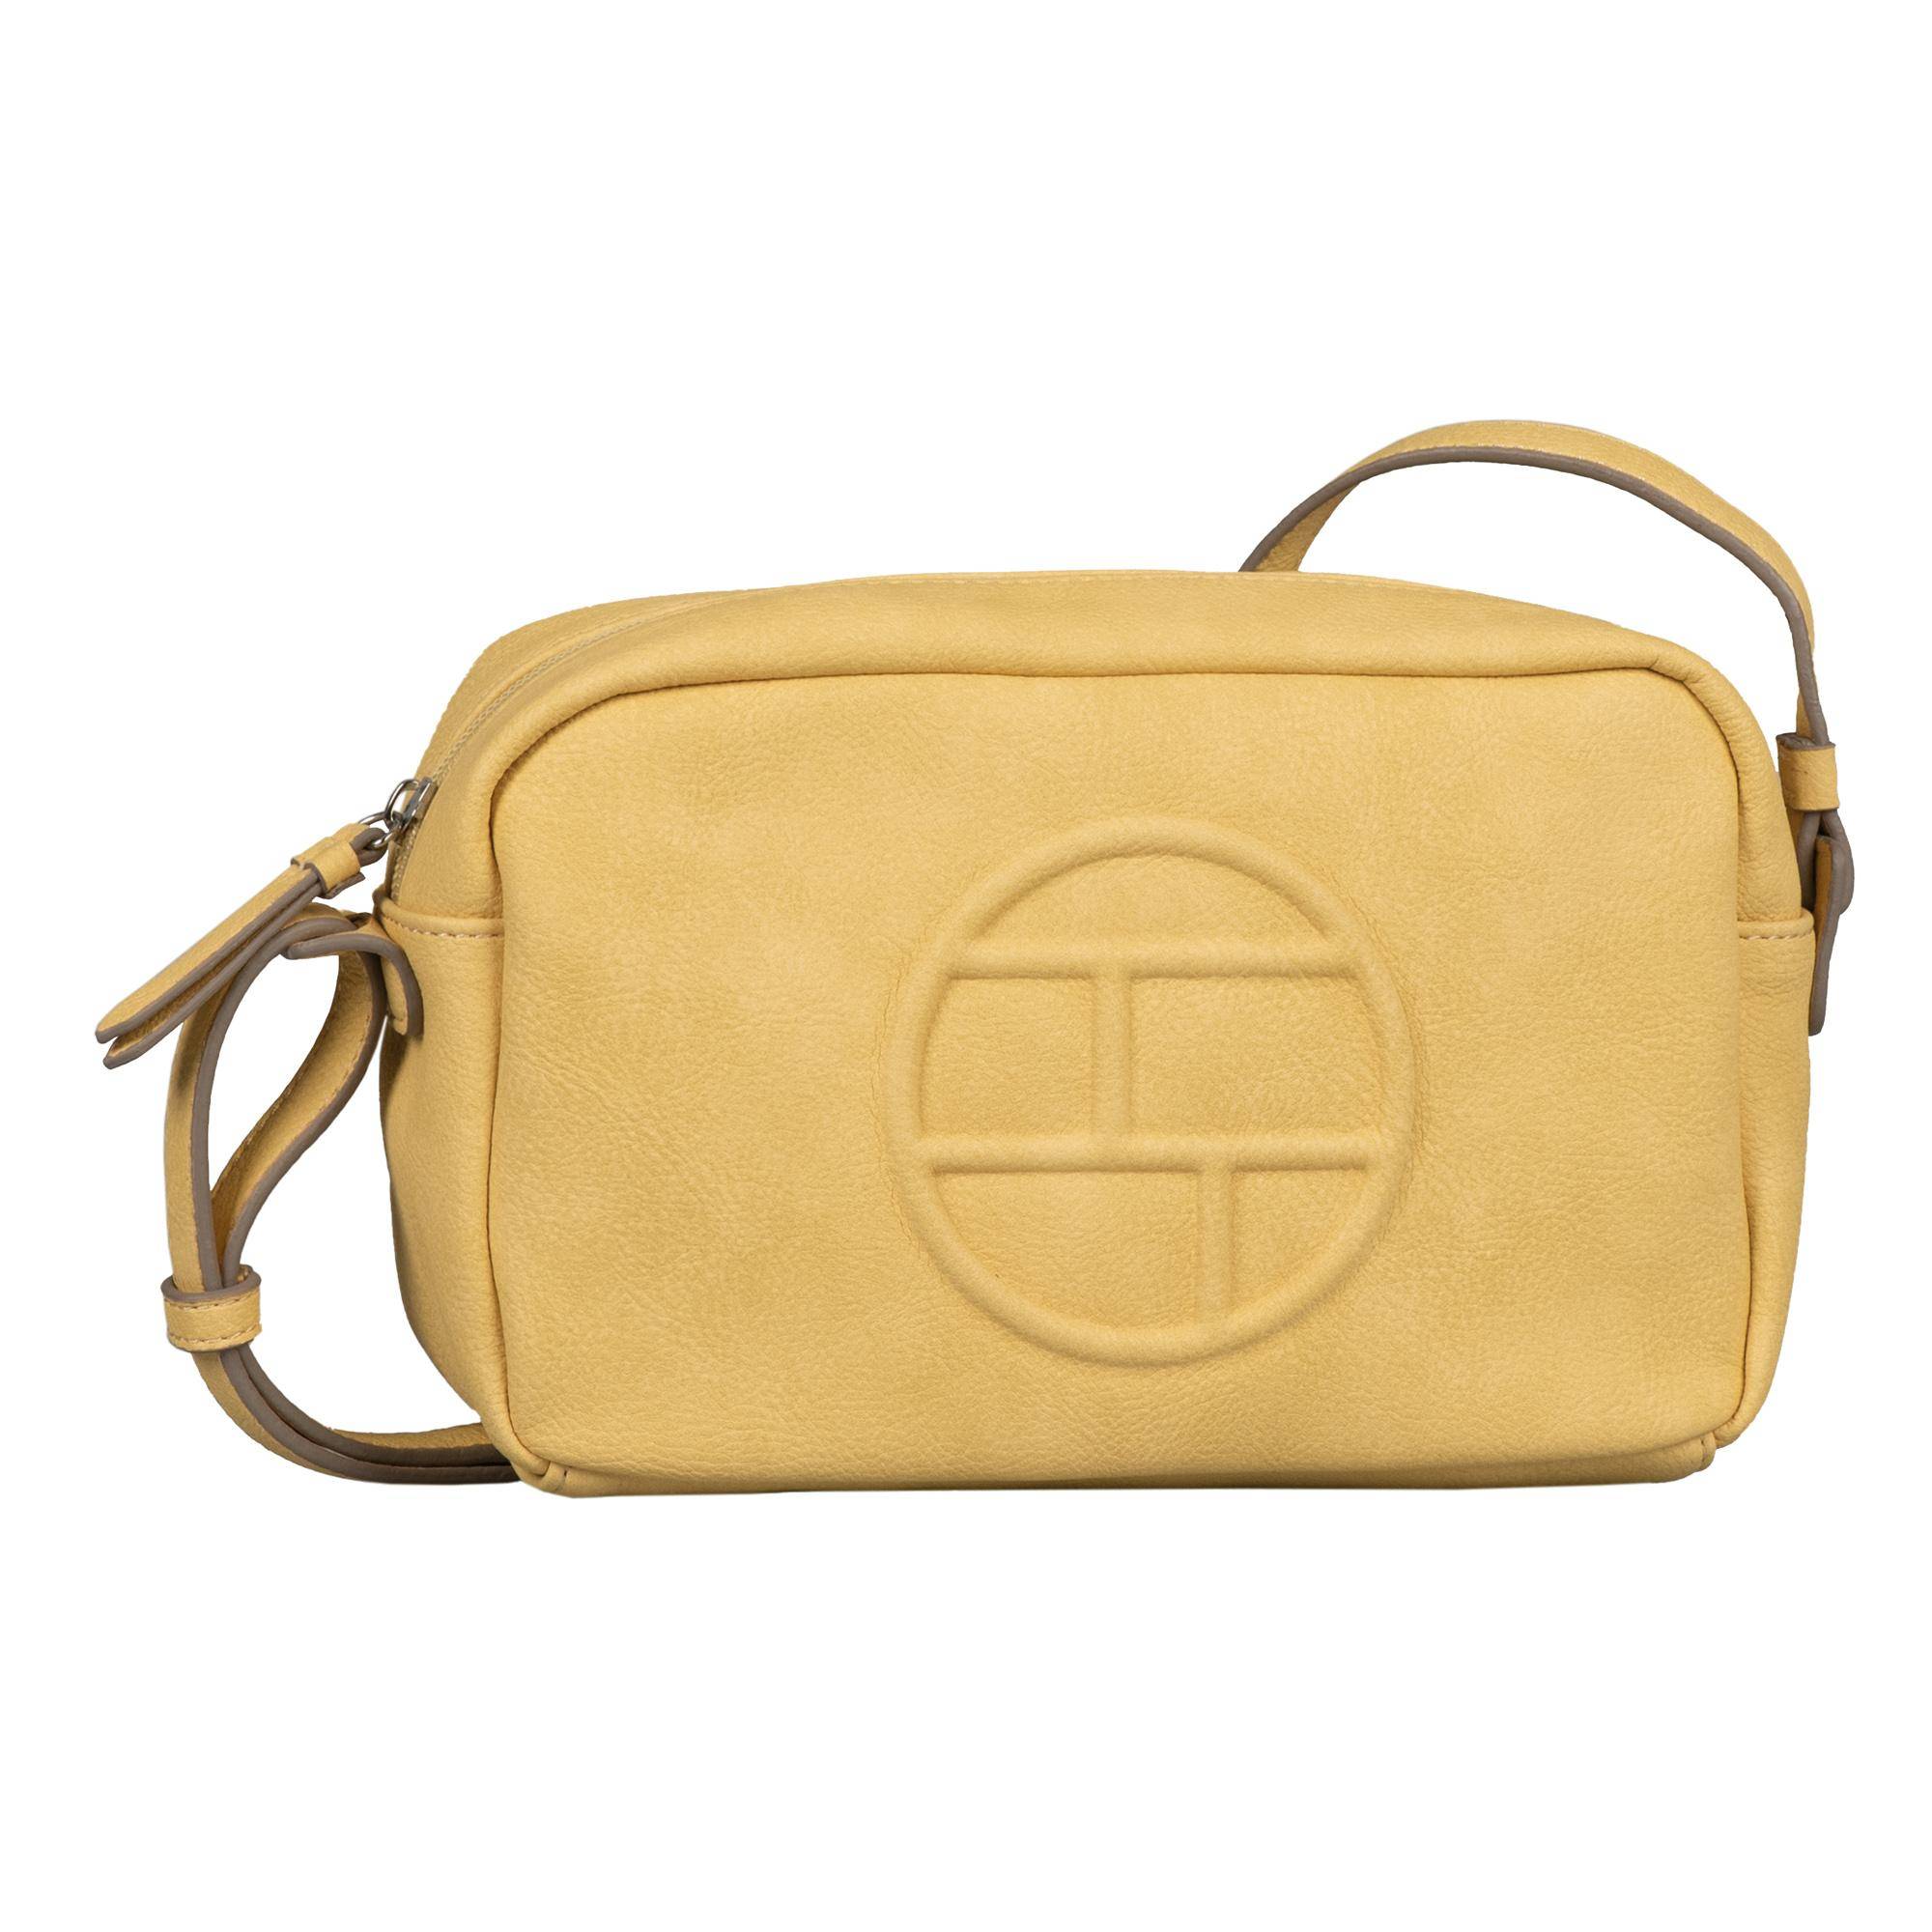 Женская сумка Tom Tailor Bags, желтая